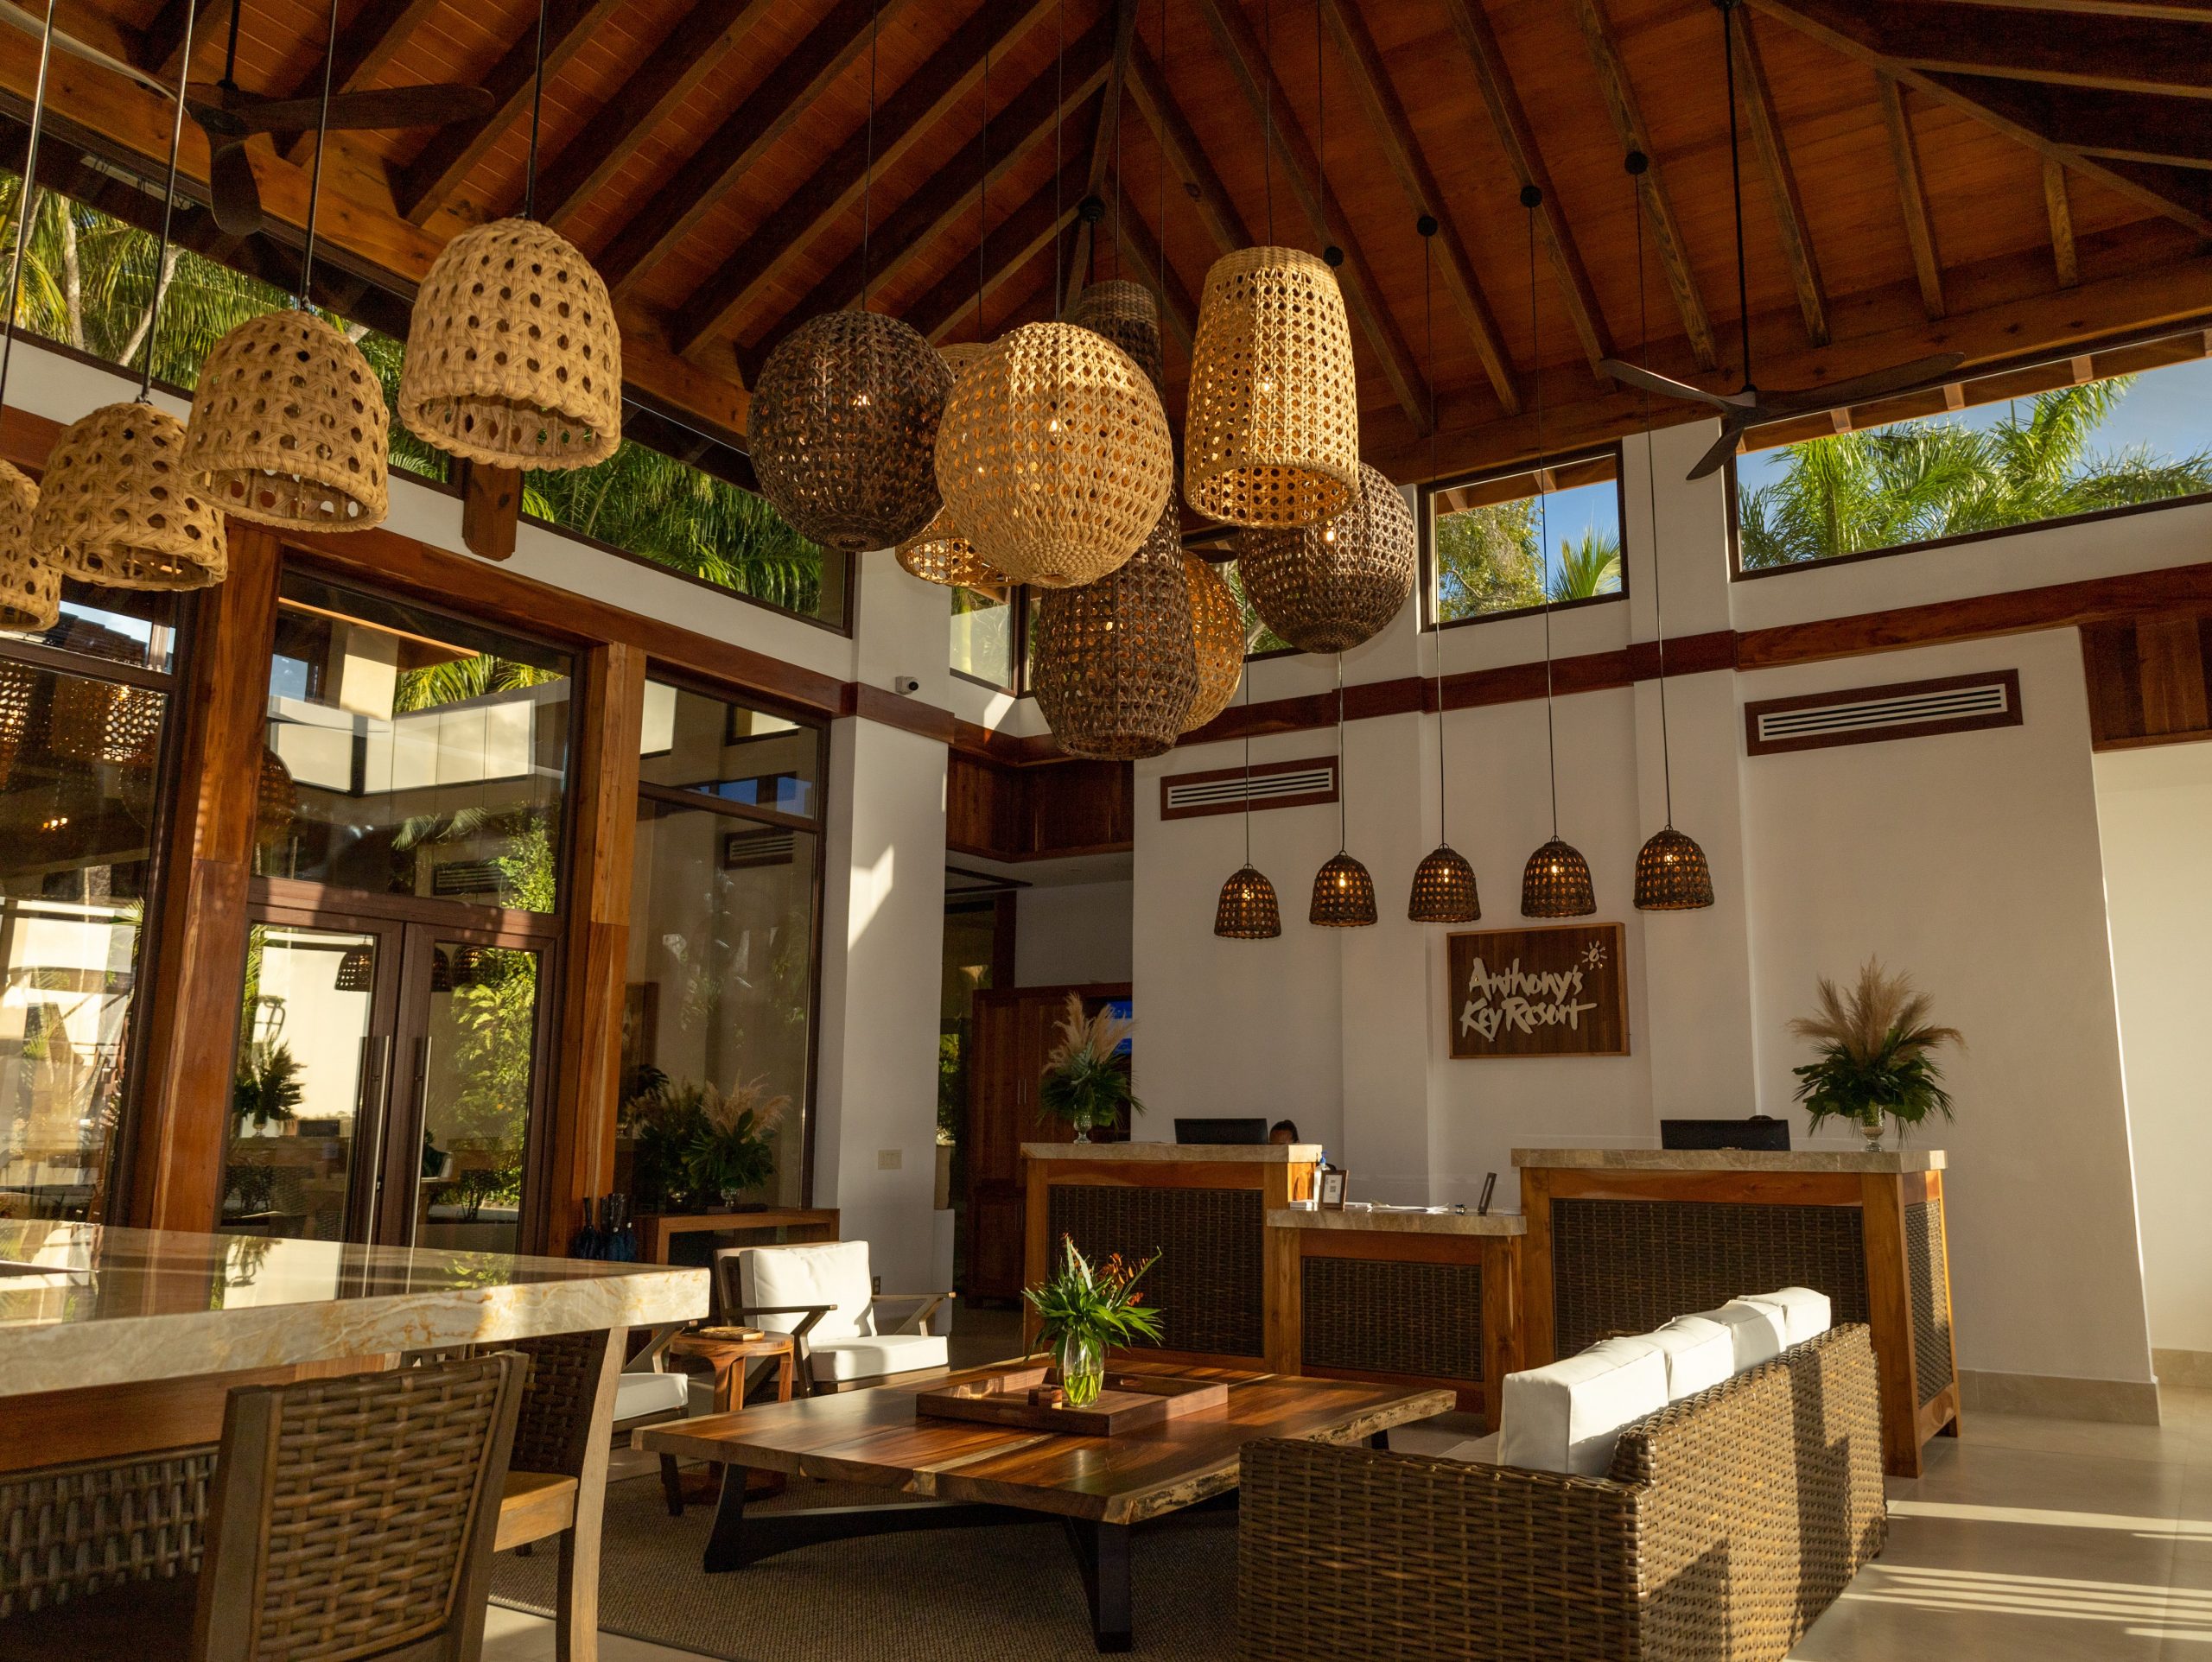 Anthony's Key Resort - Roatan, Honduras restaurant